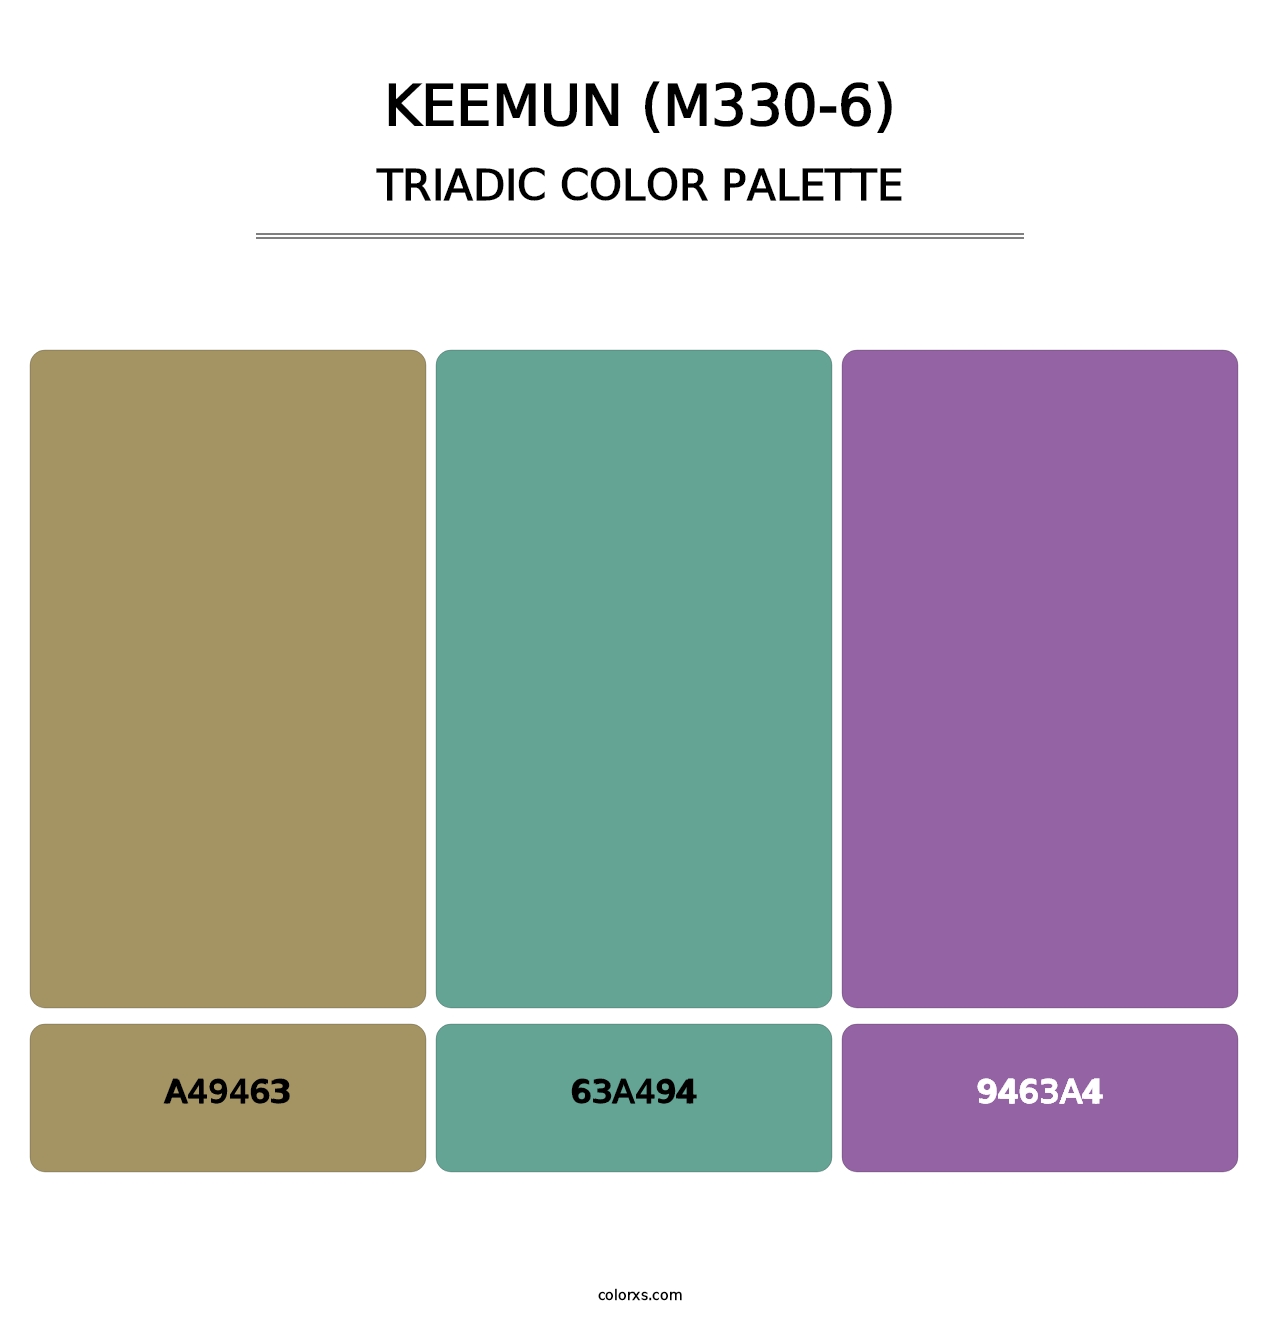 Keemun (M330-6) - Triadic Color Palette